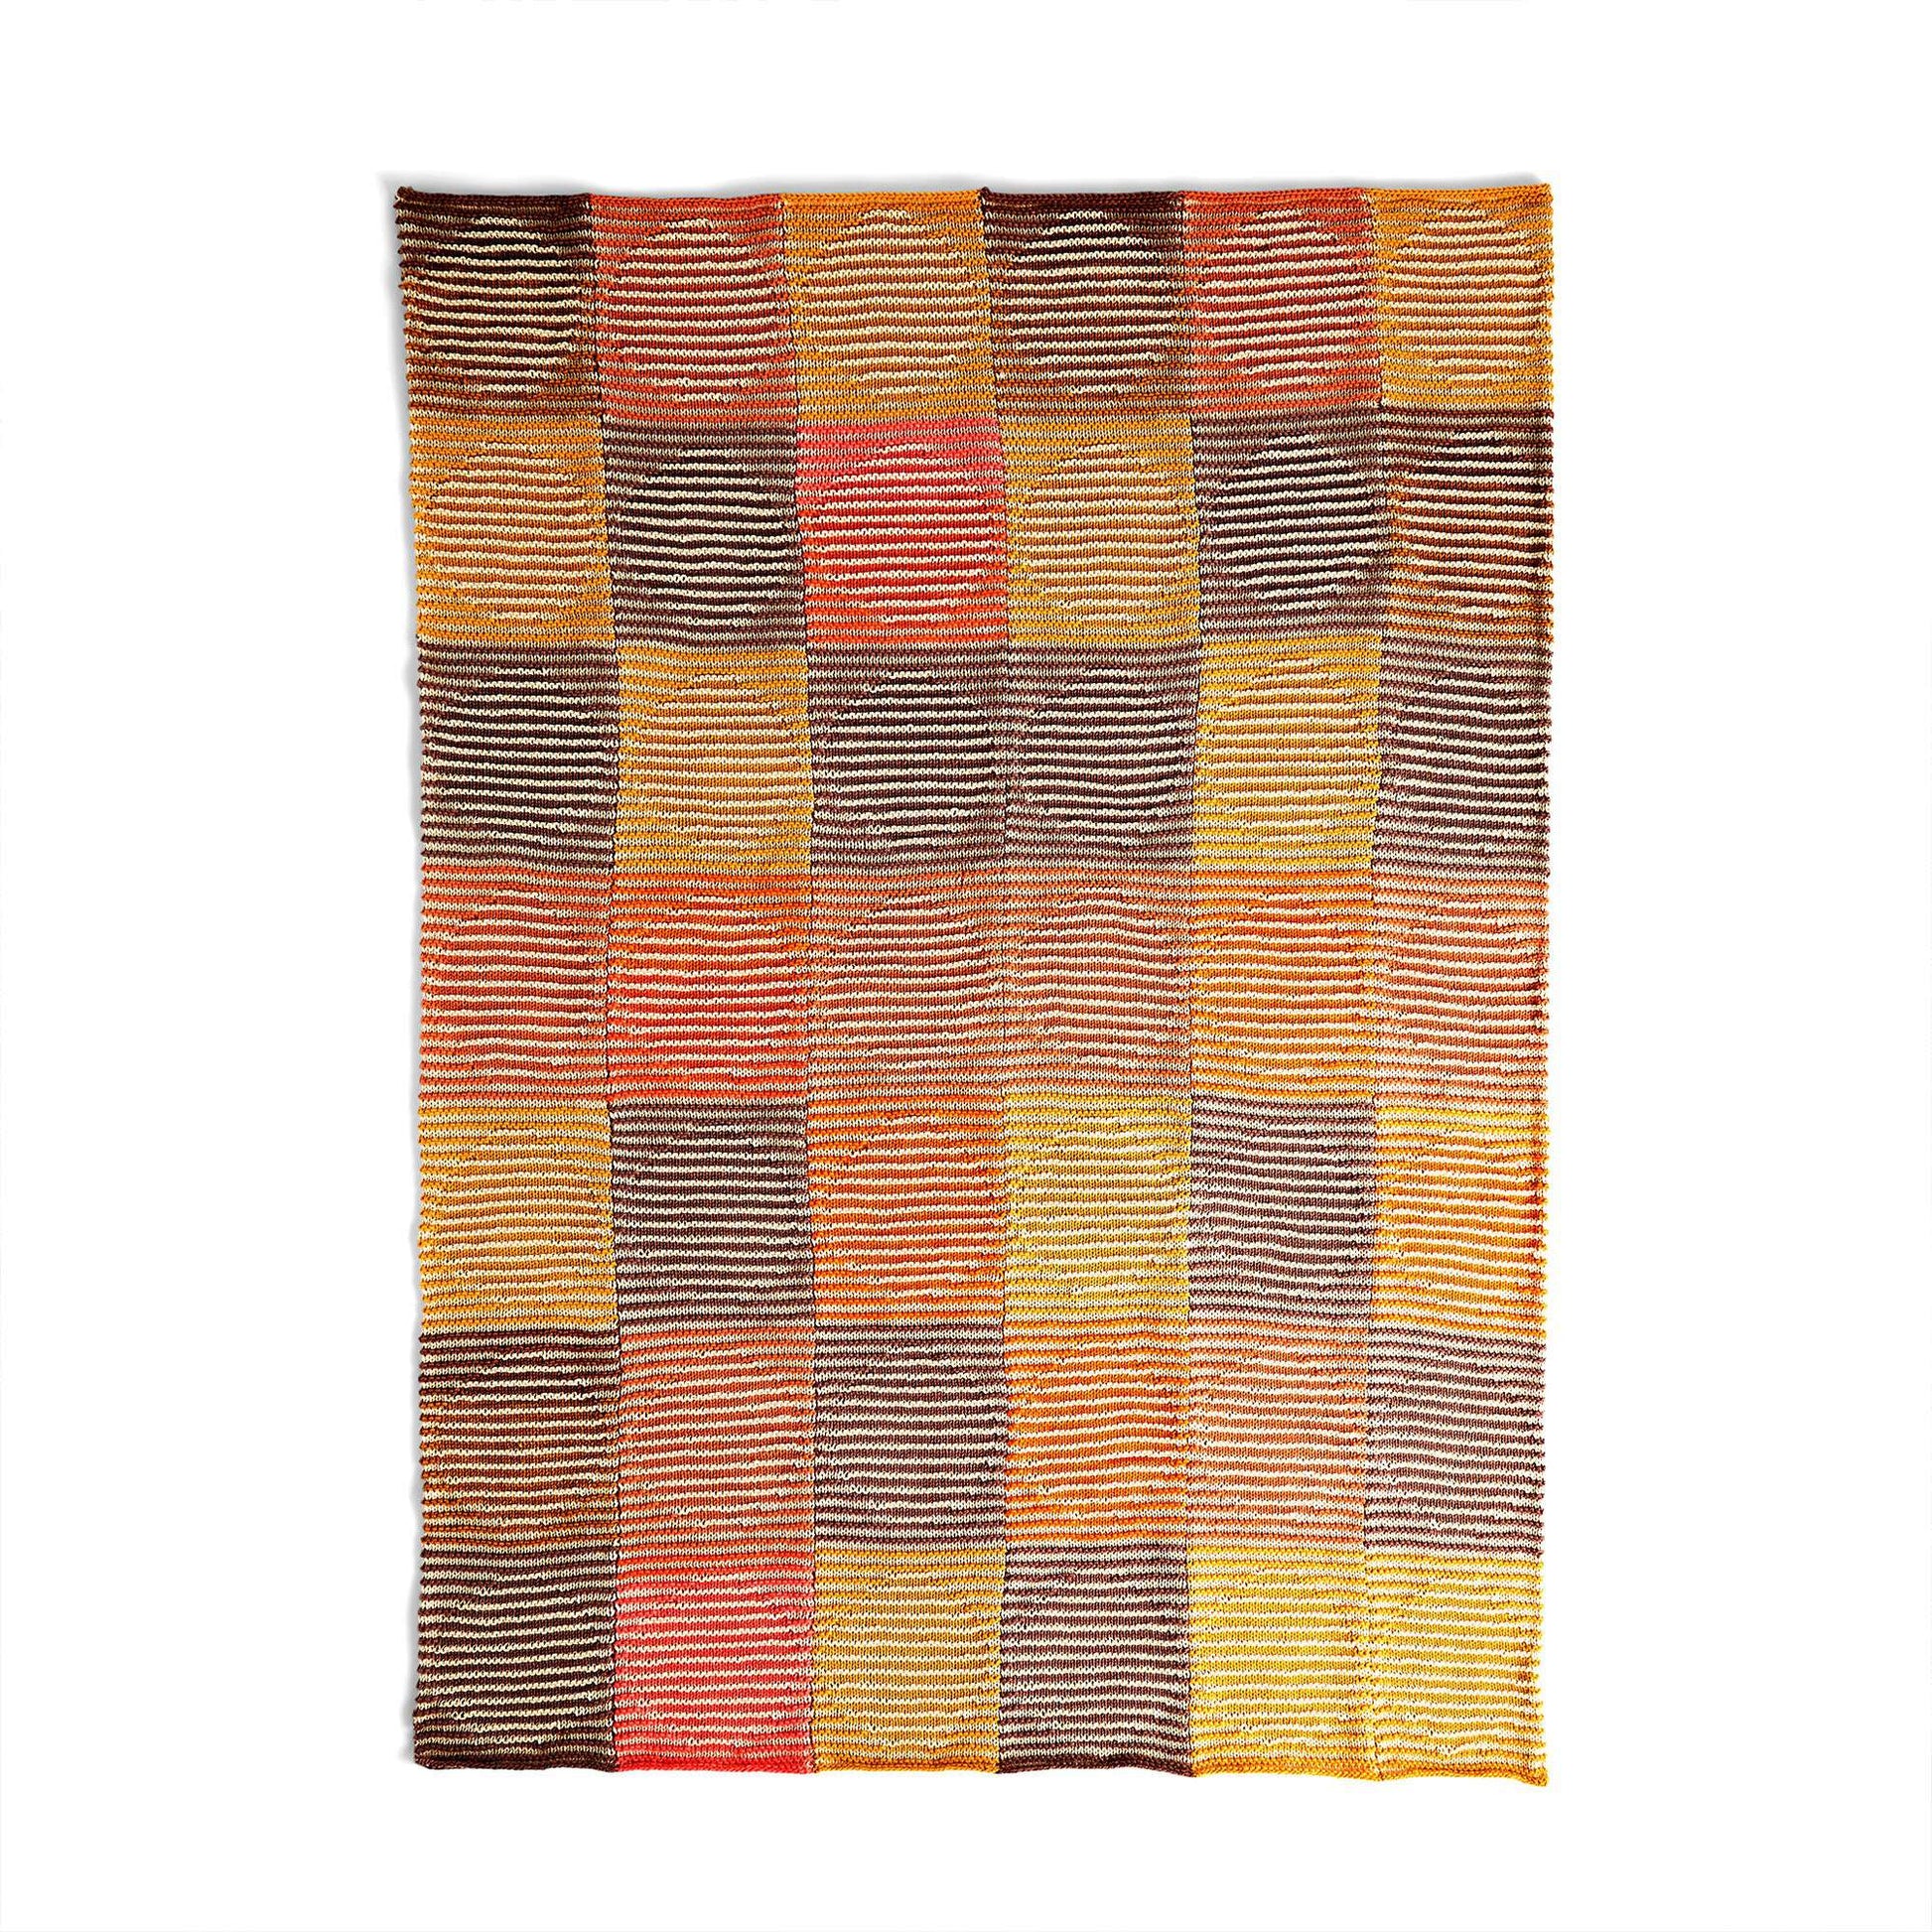 Free Caron Shadow Knit Circles Blanket Pattern